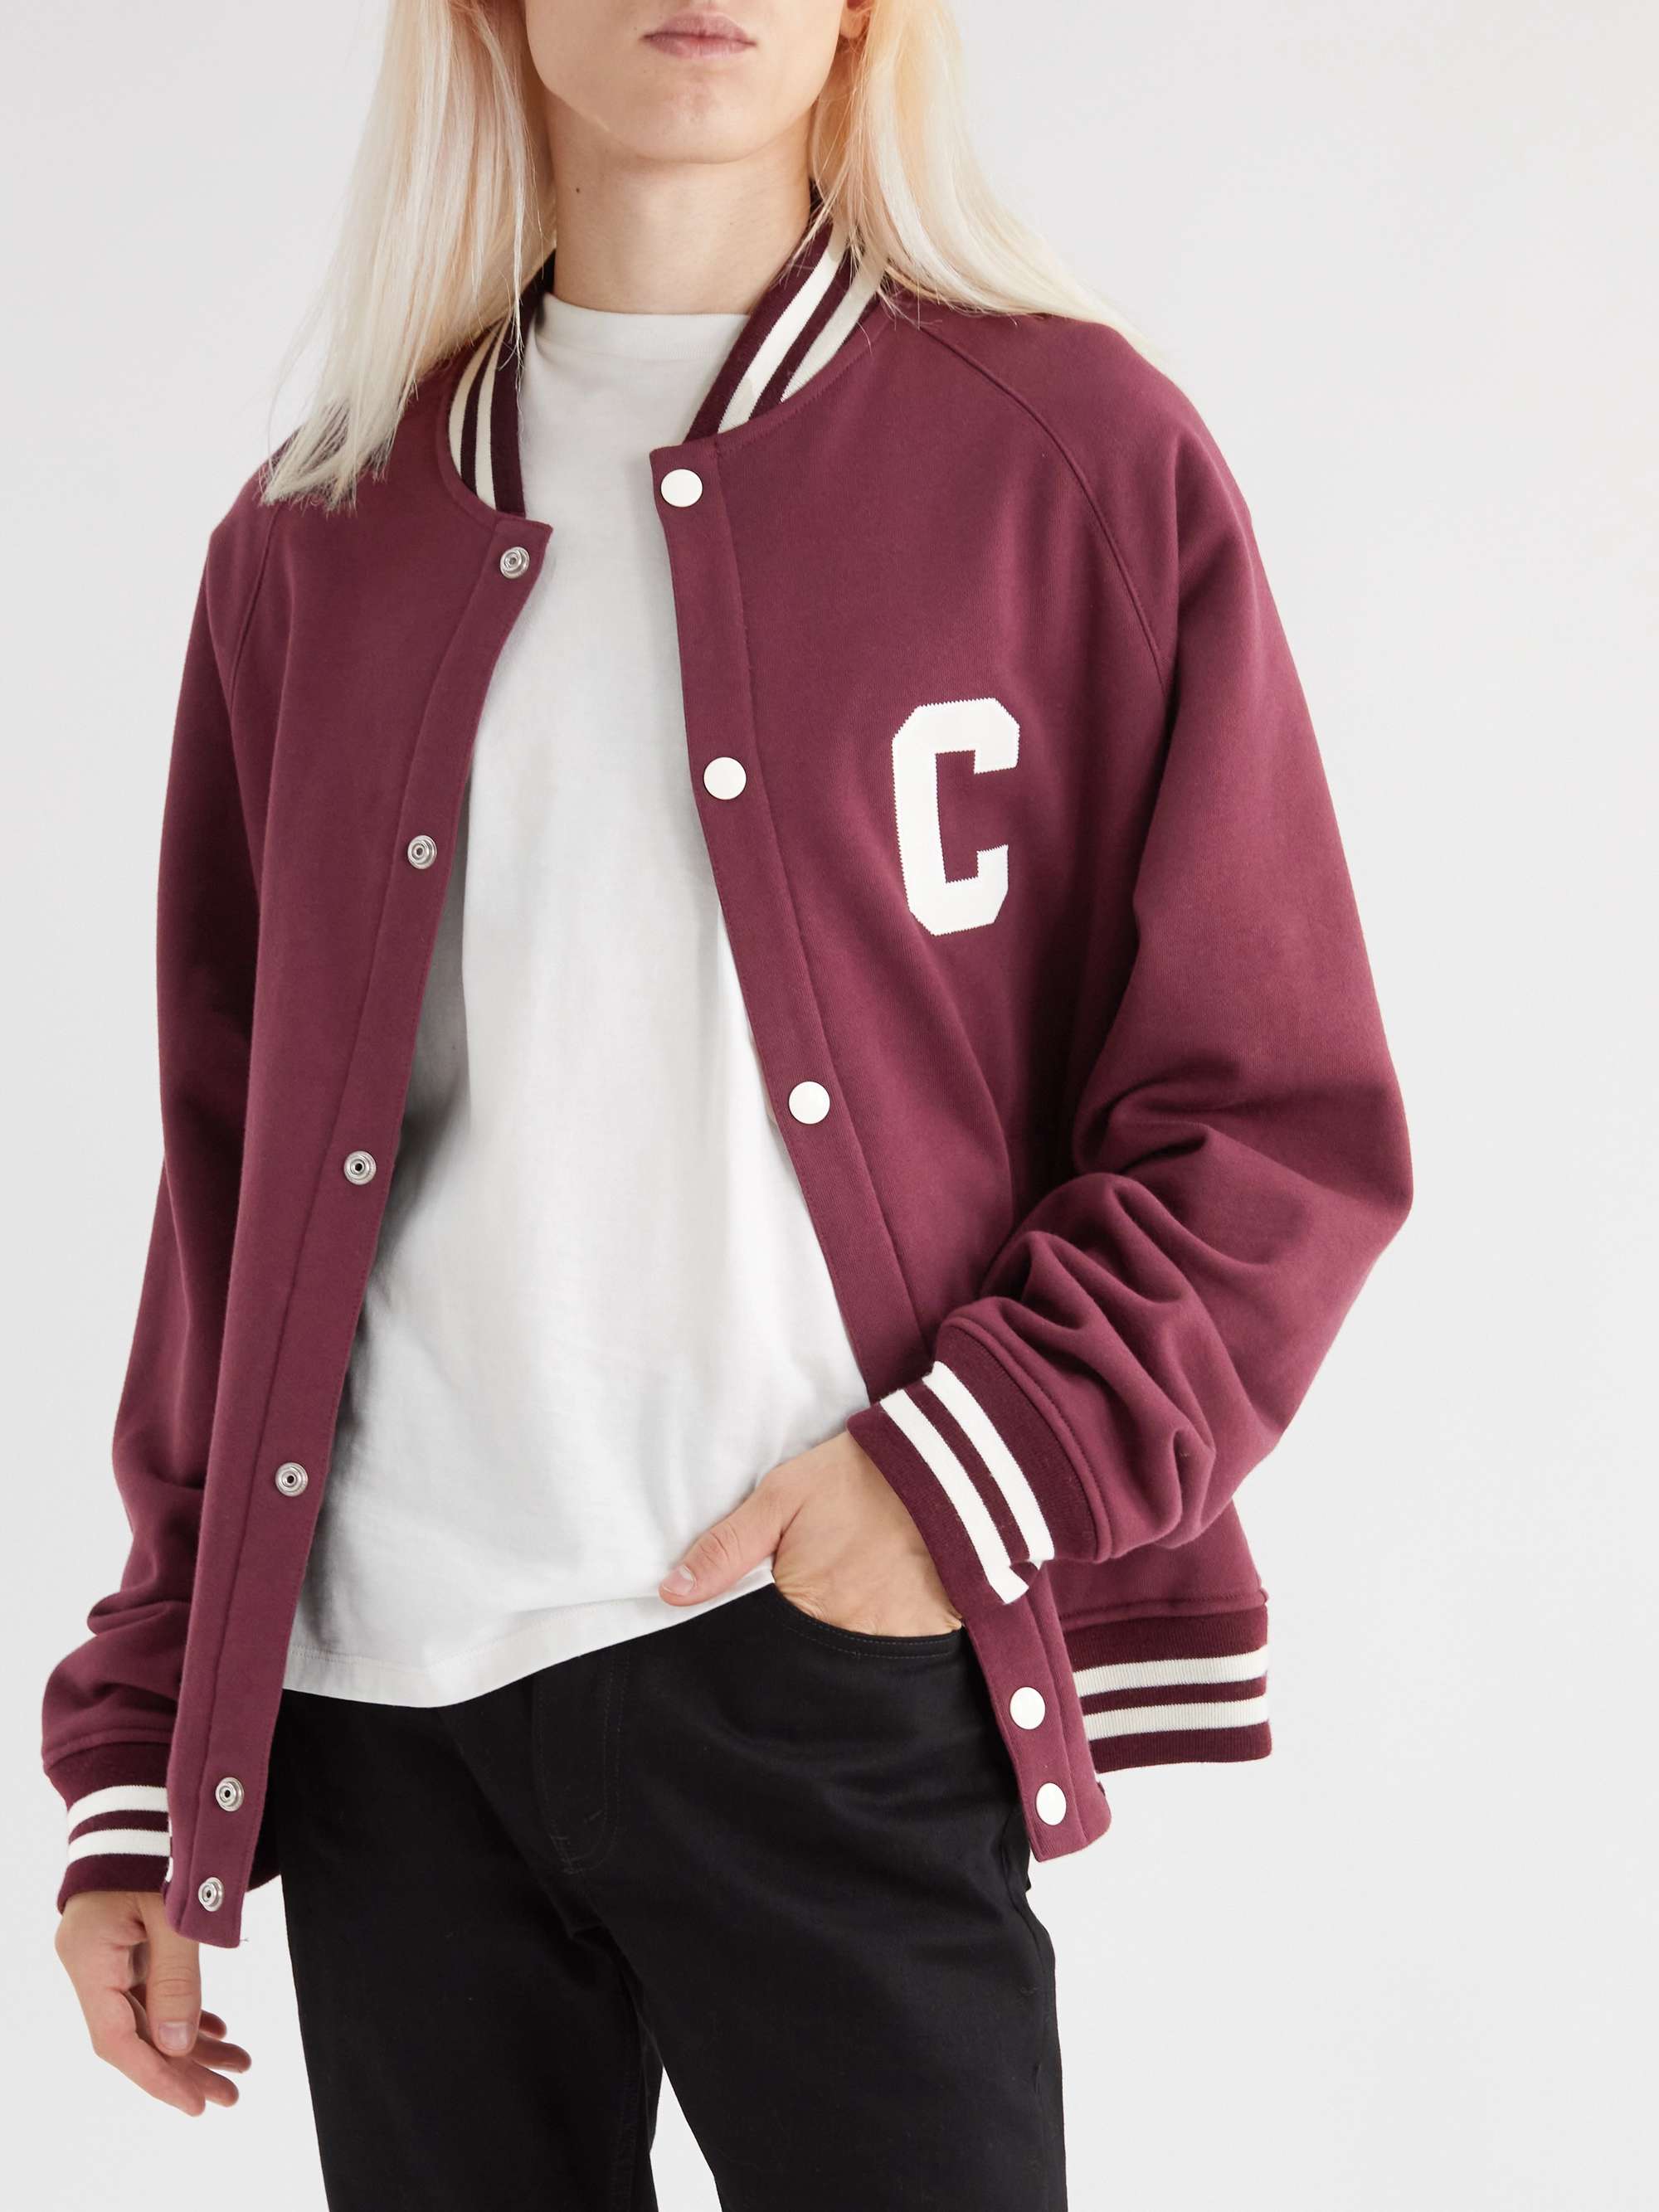 CELINE HOMME Logo-Appliquéd Cotton-Jersey Varsity Jacket